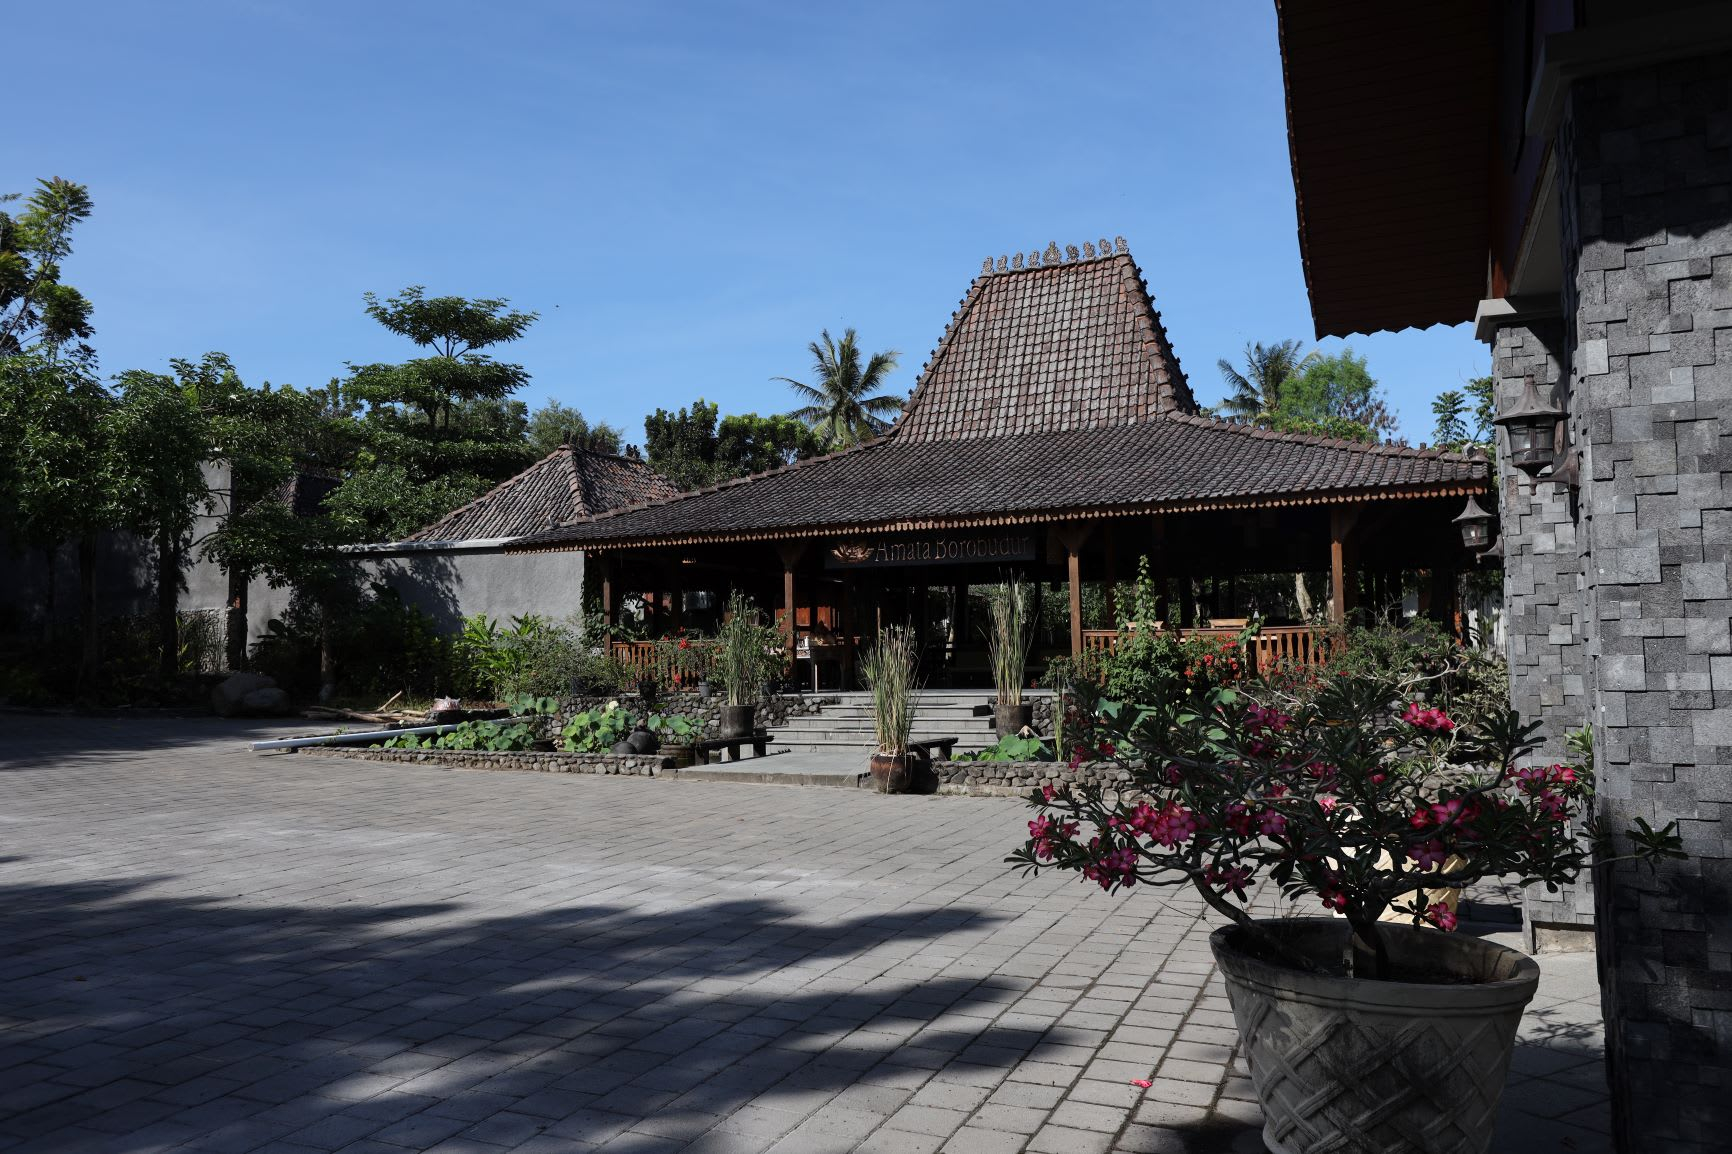 Exterior & Views 1, Amata Borobudur, Magelang